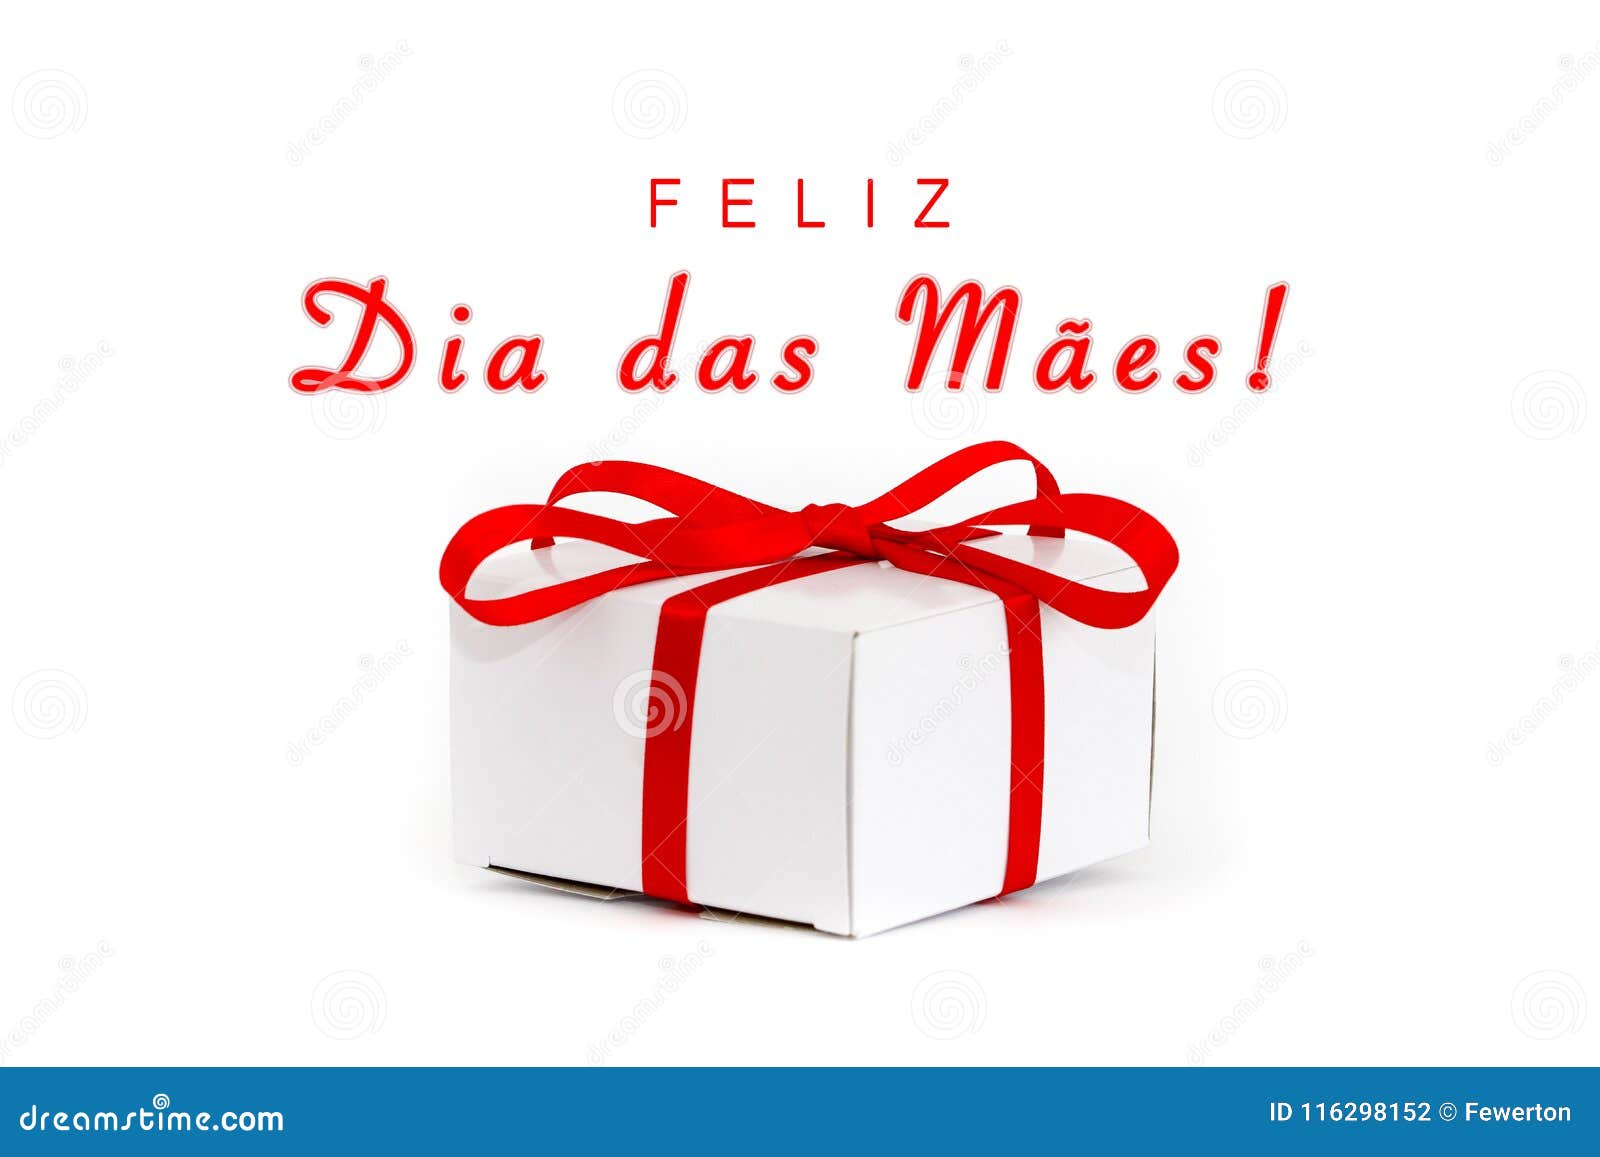 feliz dia das maes in portuguese: happy mothersÃ¢â¬â¢s day! text message and white cardboard gift box with decorative red ribbon bow